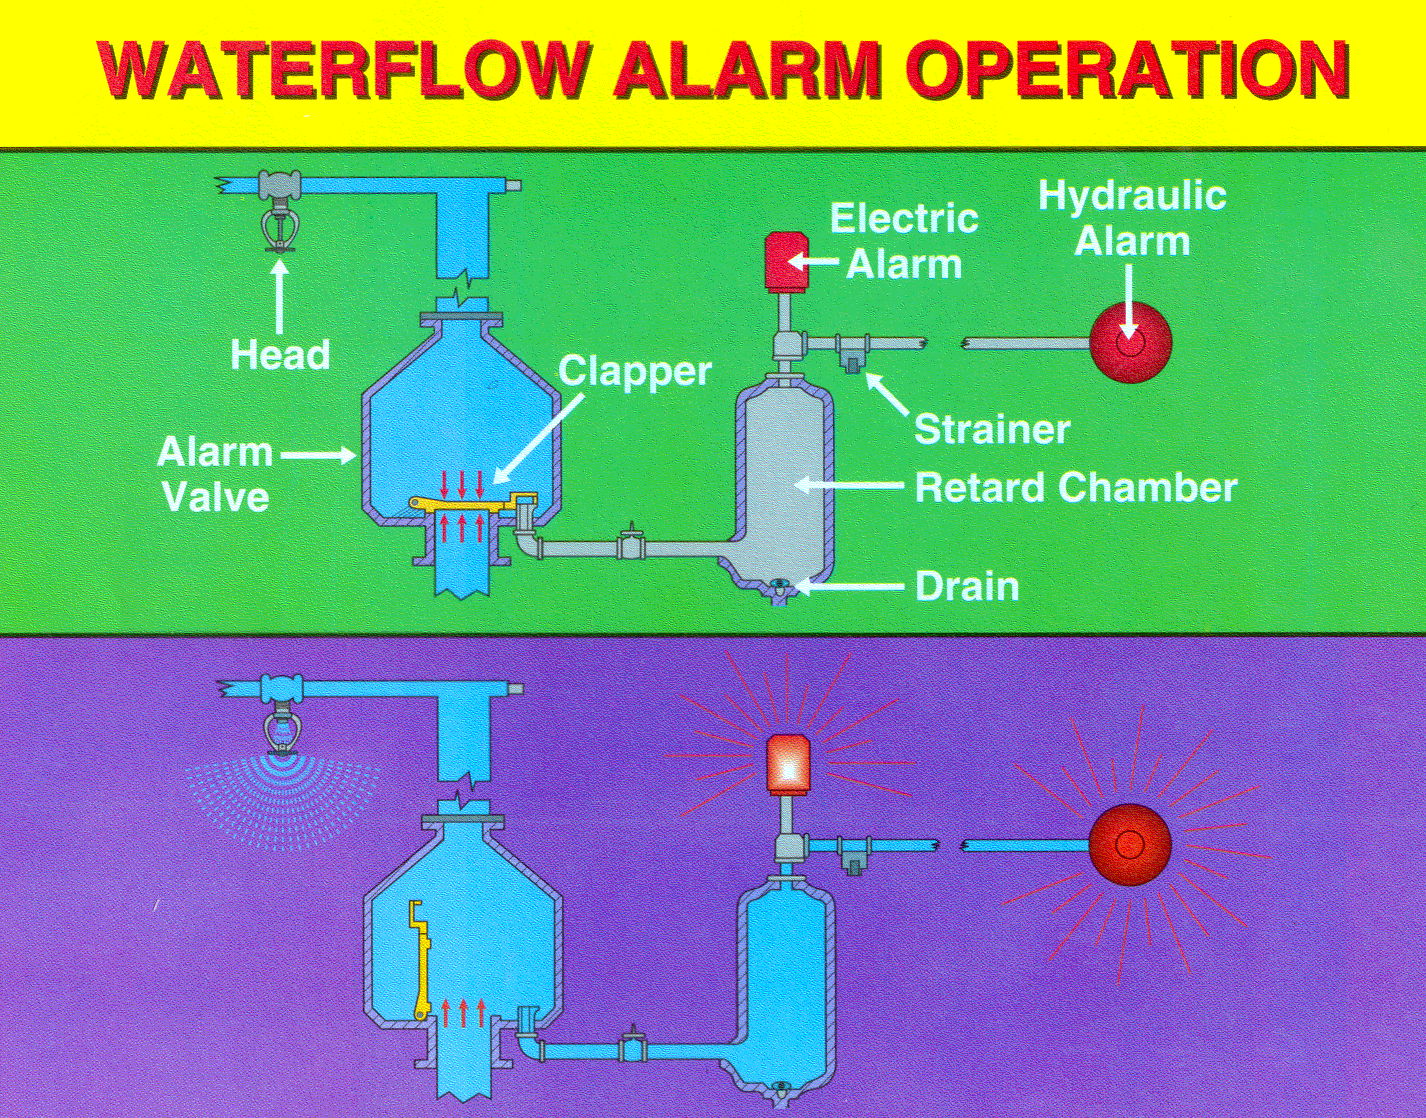 Waterflow Alarm Operation